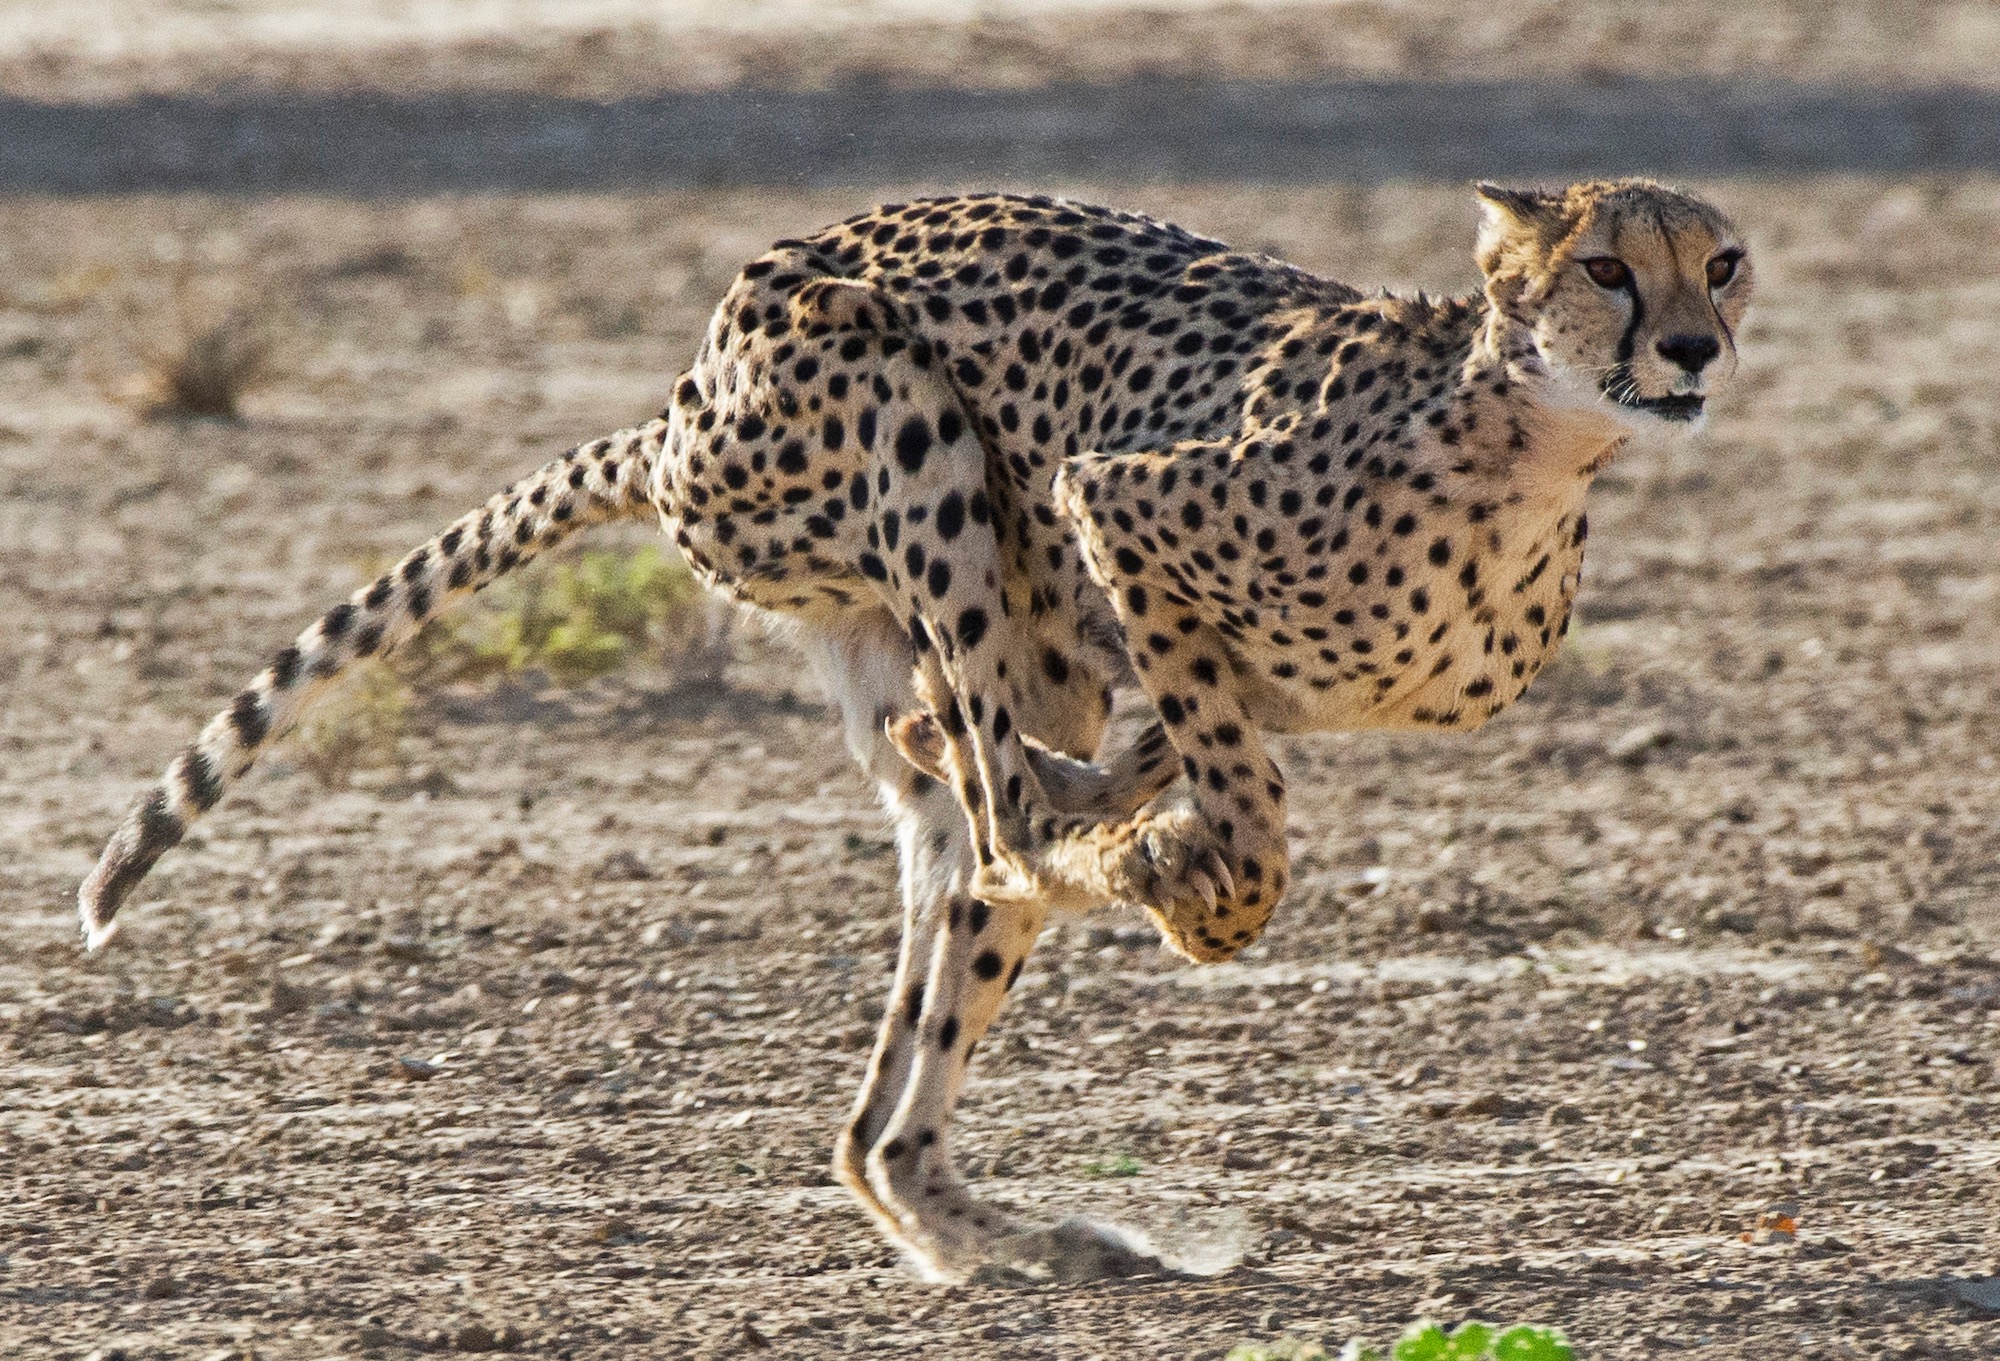 Cheetah sprinting